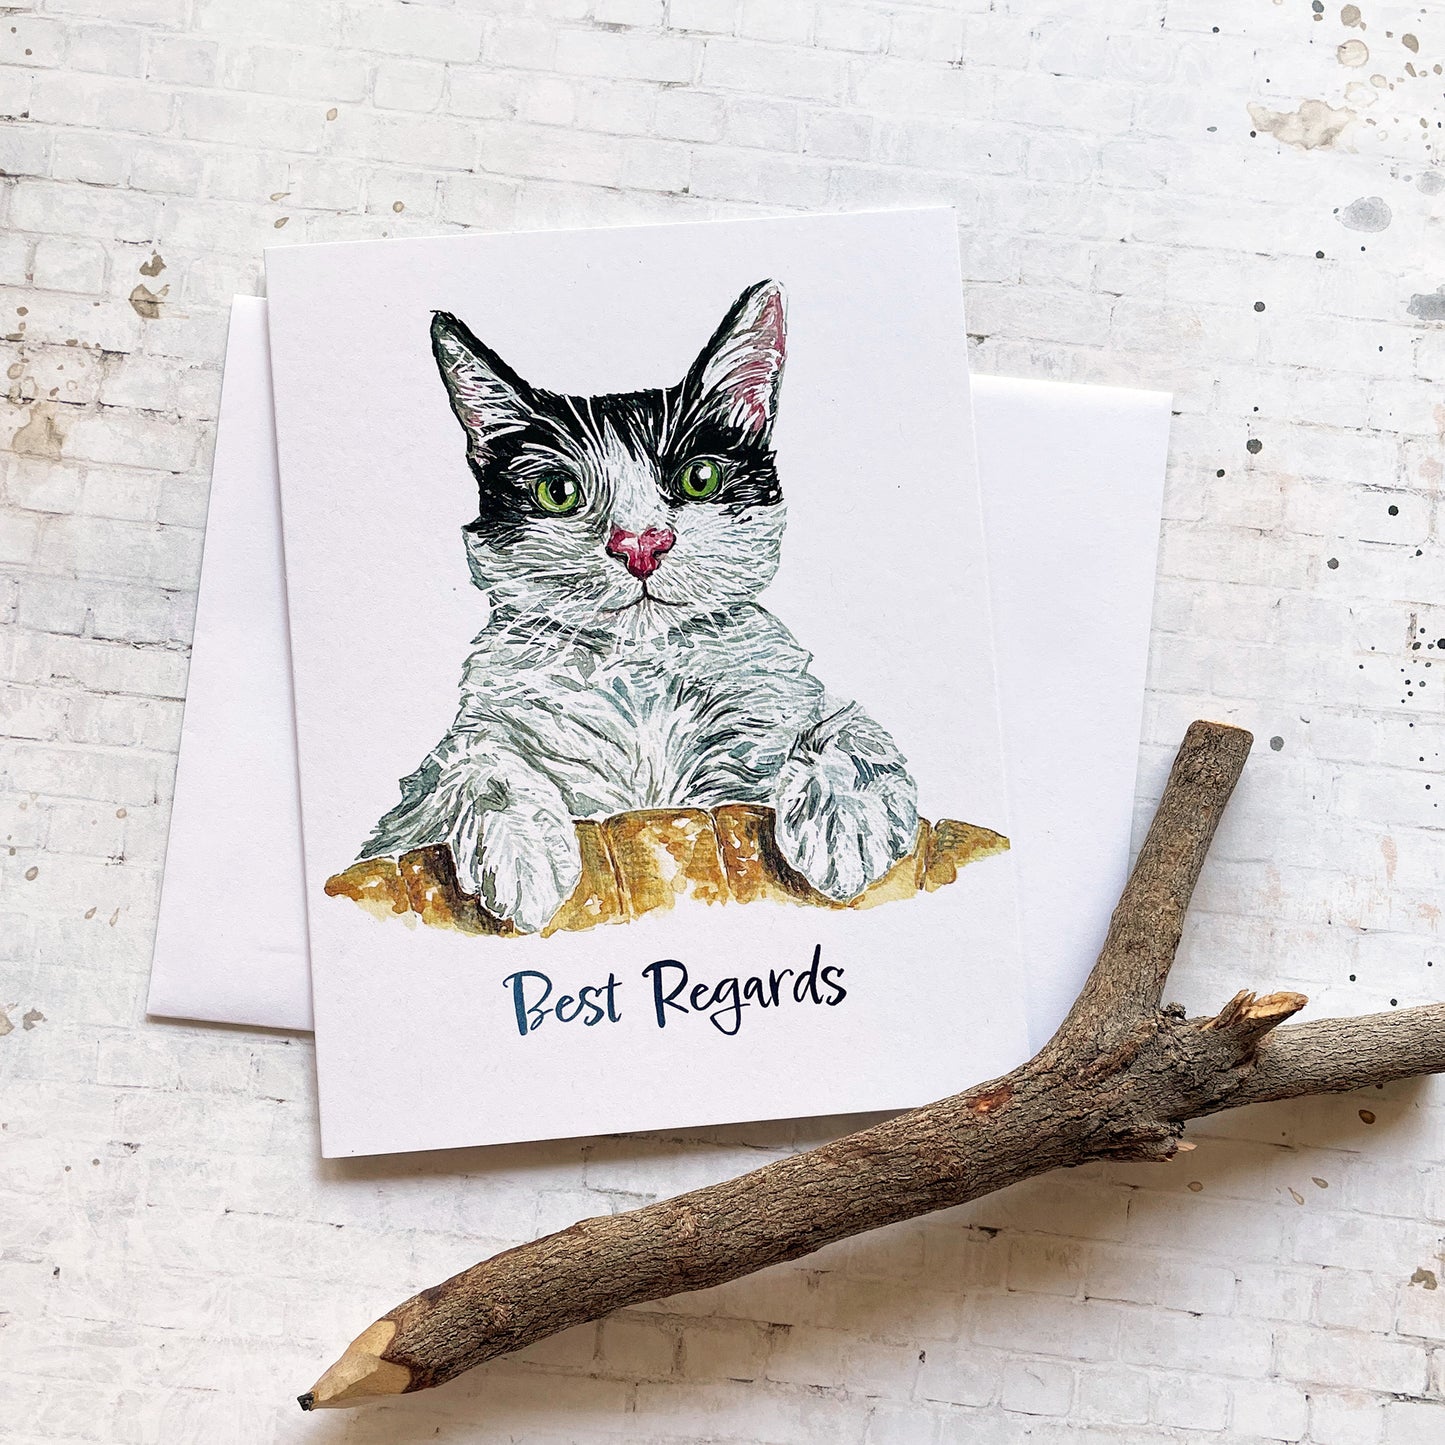 Best Regards Cat Greeting Card